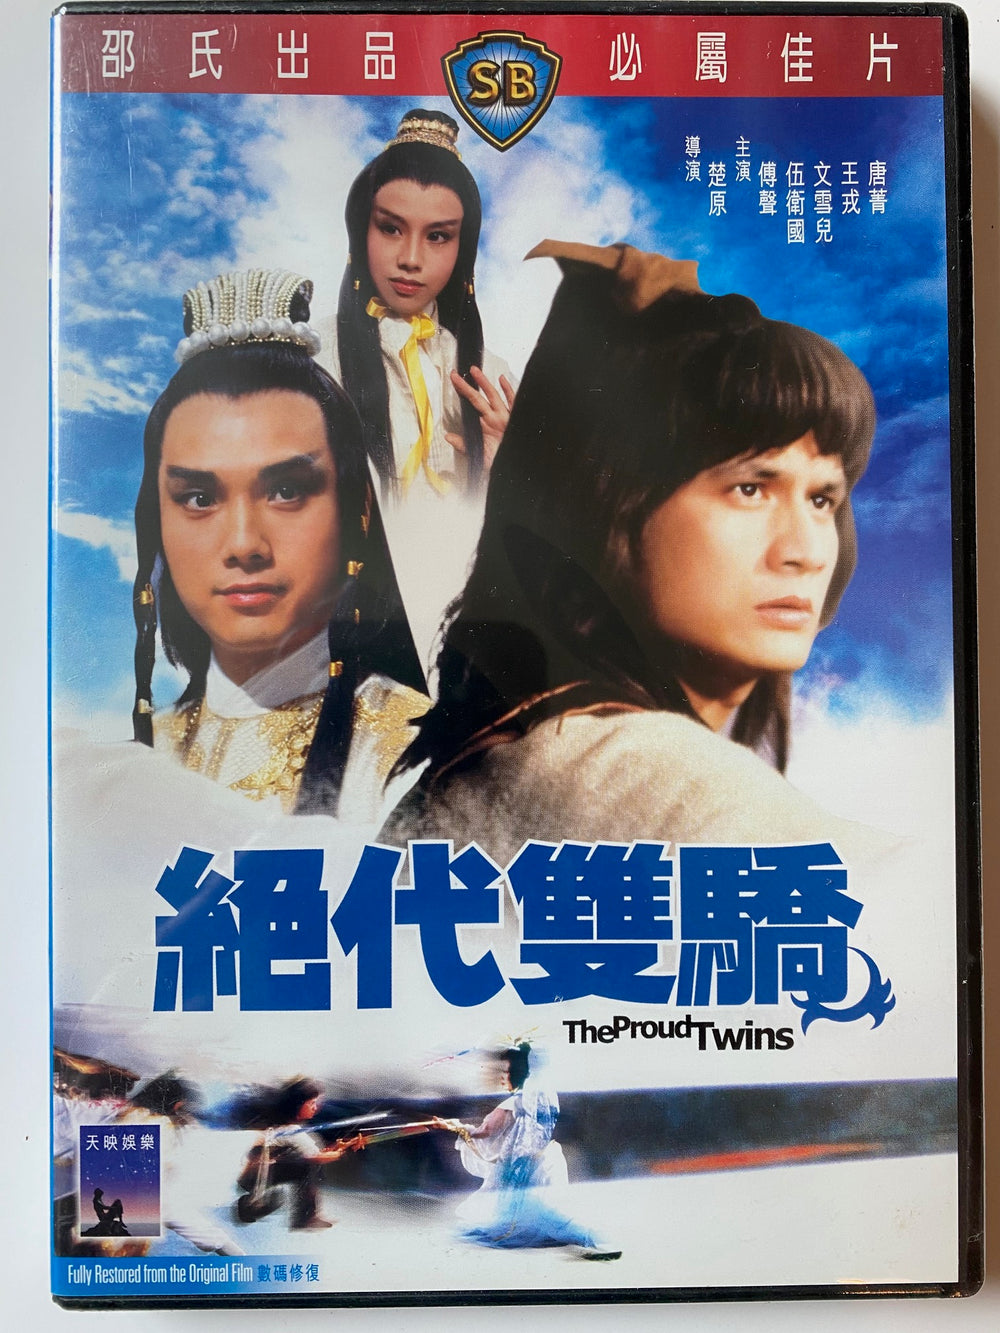 The Proud Twins 絕代雙驕 1979 (SHAW BROS) DVD ENGLISH SUBTITLES (REGION 3)